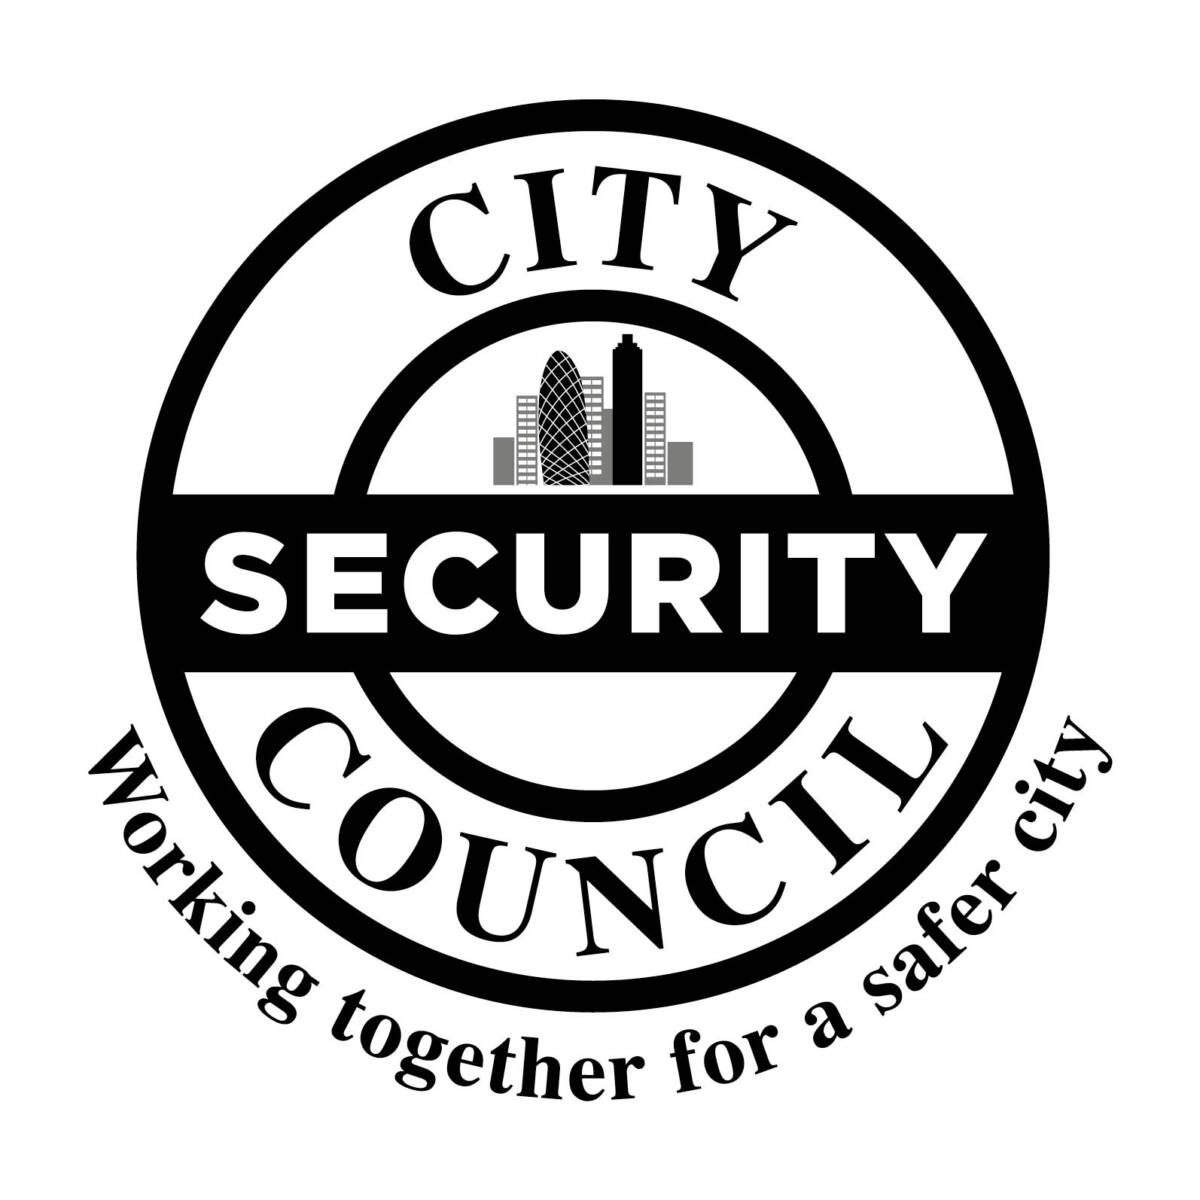 City-security-council-logo.jpg